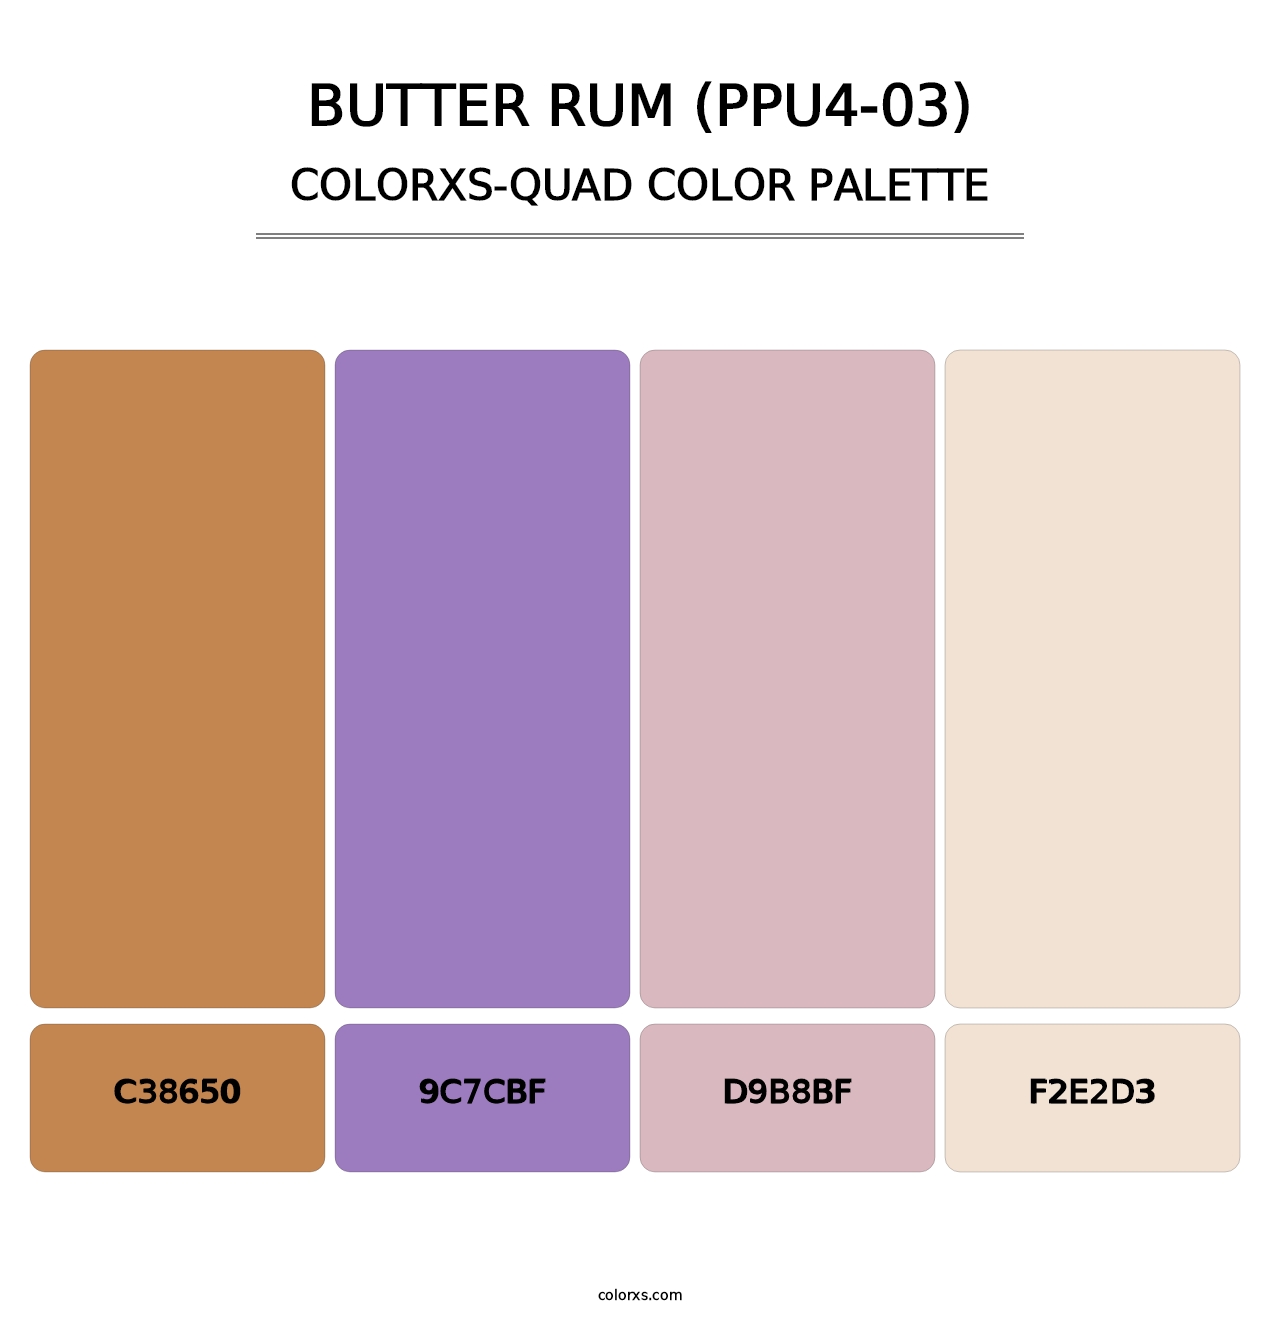 Butter Rum (PPU4-03) - Colorxs Quad Palette